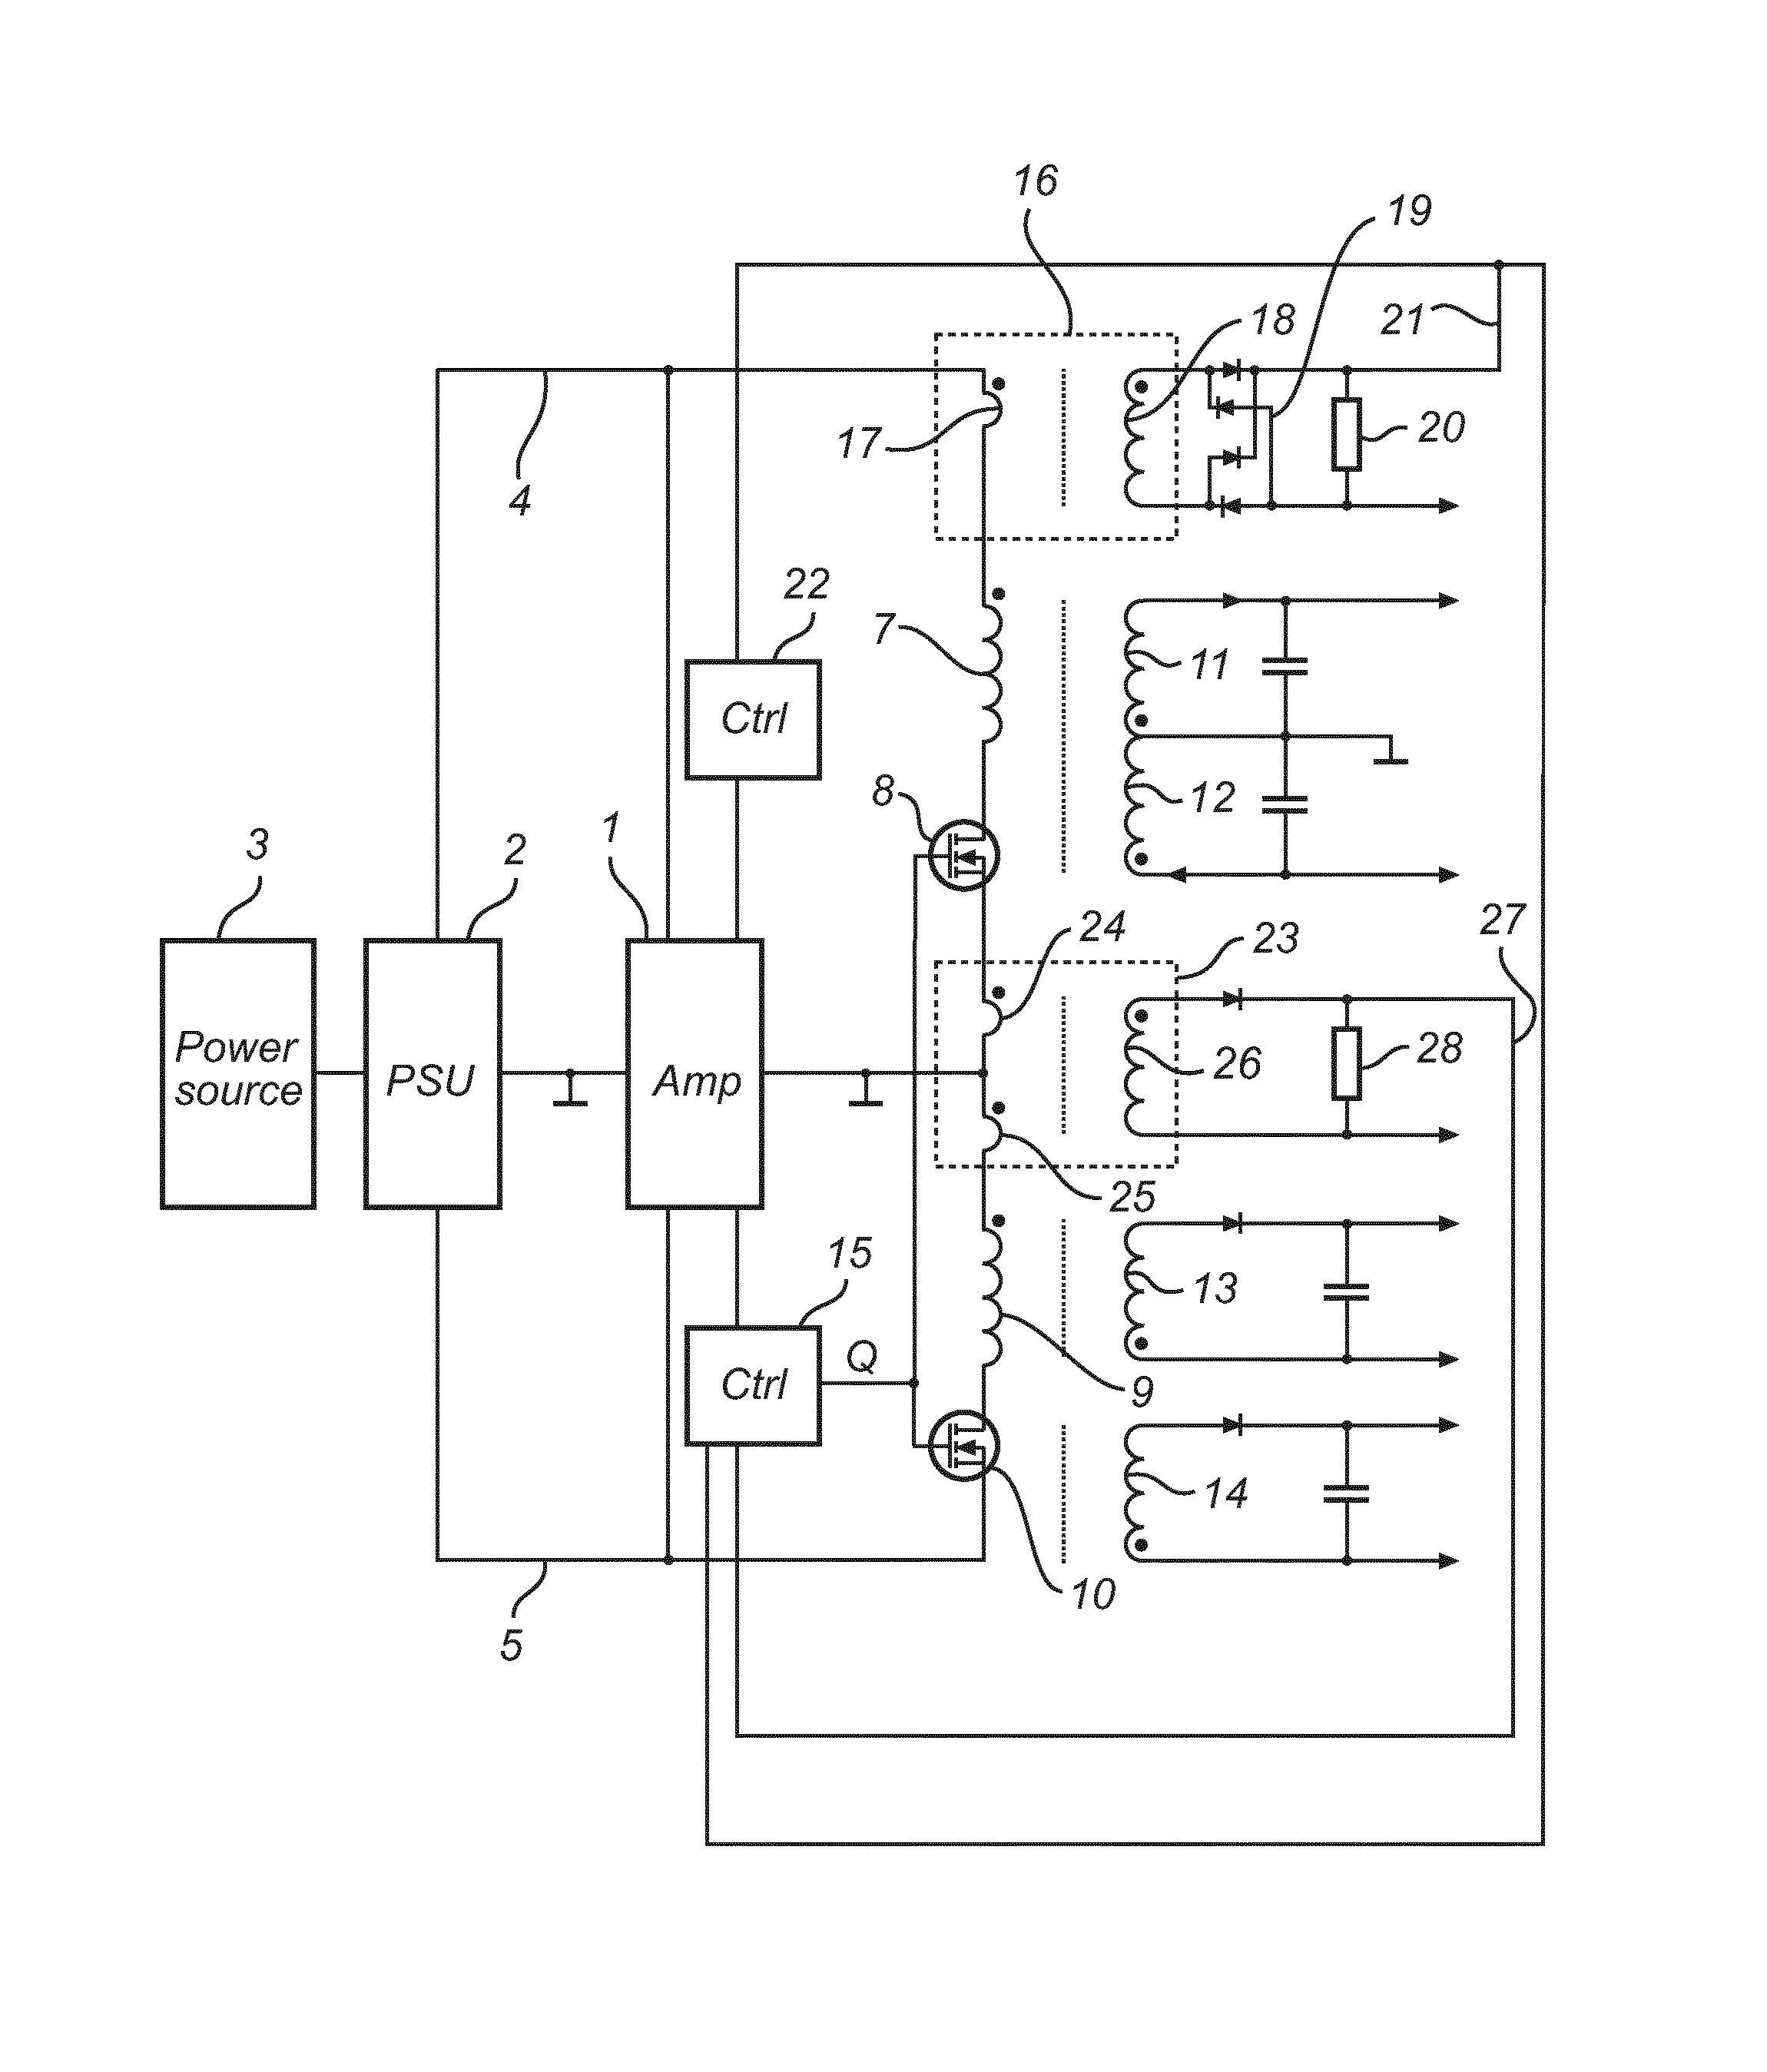 Power supply arrangement for single ended class D amplifier